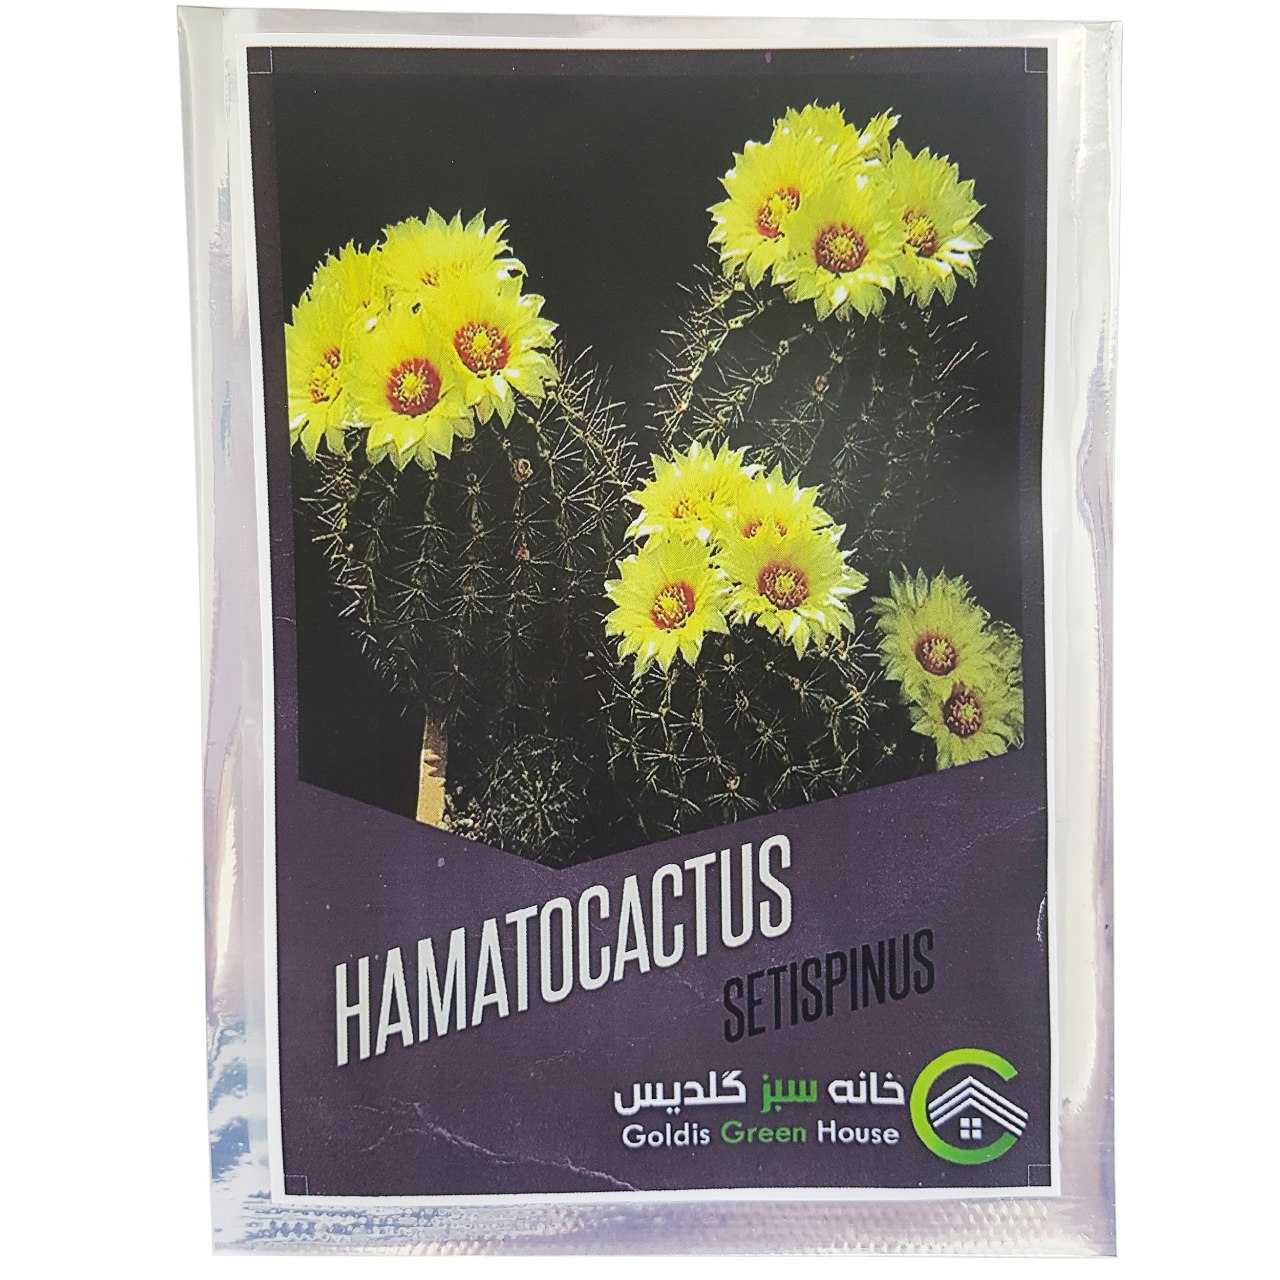 Seeds of Hamato cactus Stispinus Goldis green house